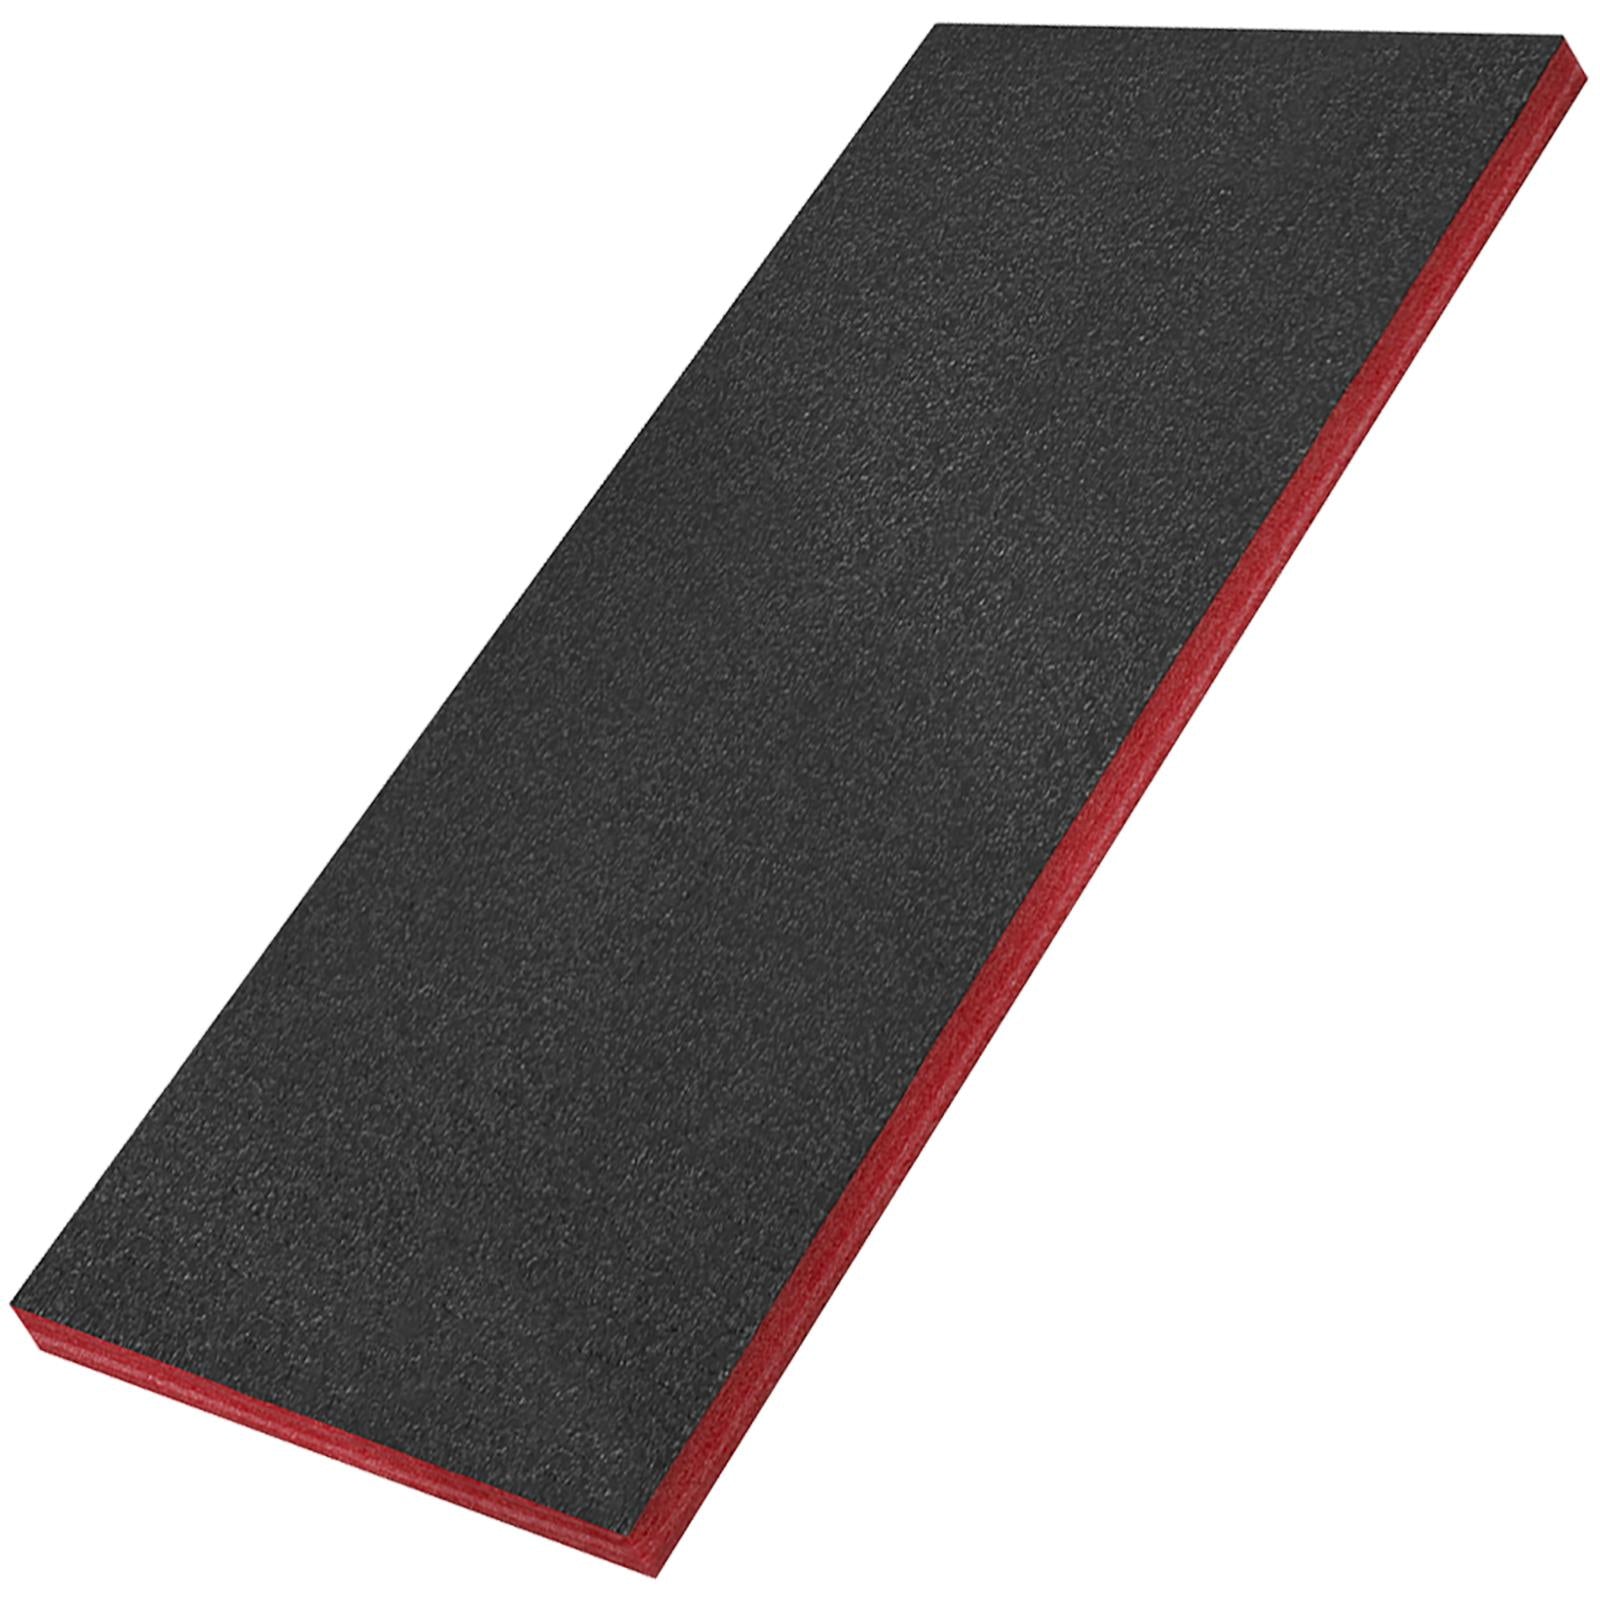 Sealey Easy Peel Shadow Foam Red Black 1200 x 550 x 50mm Tool Tray Insert